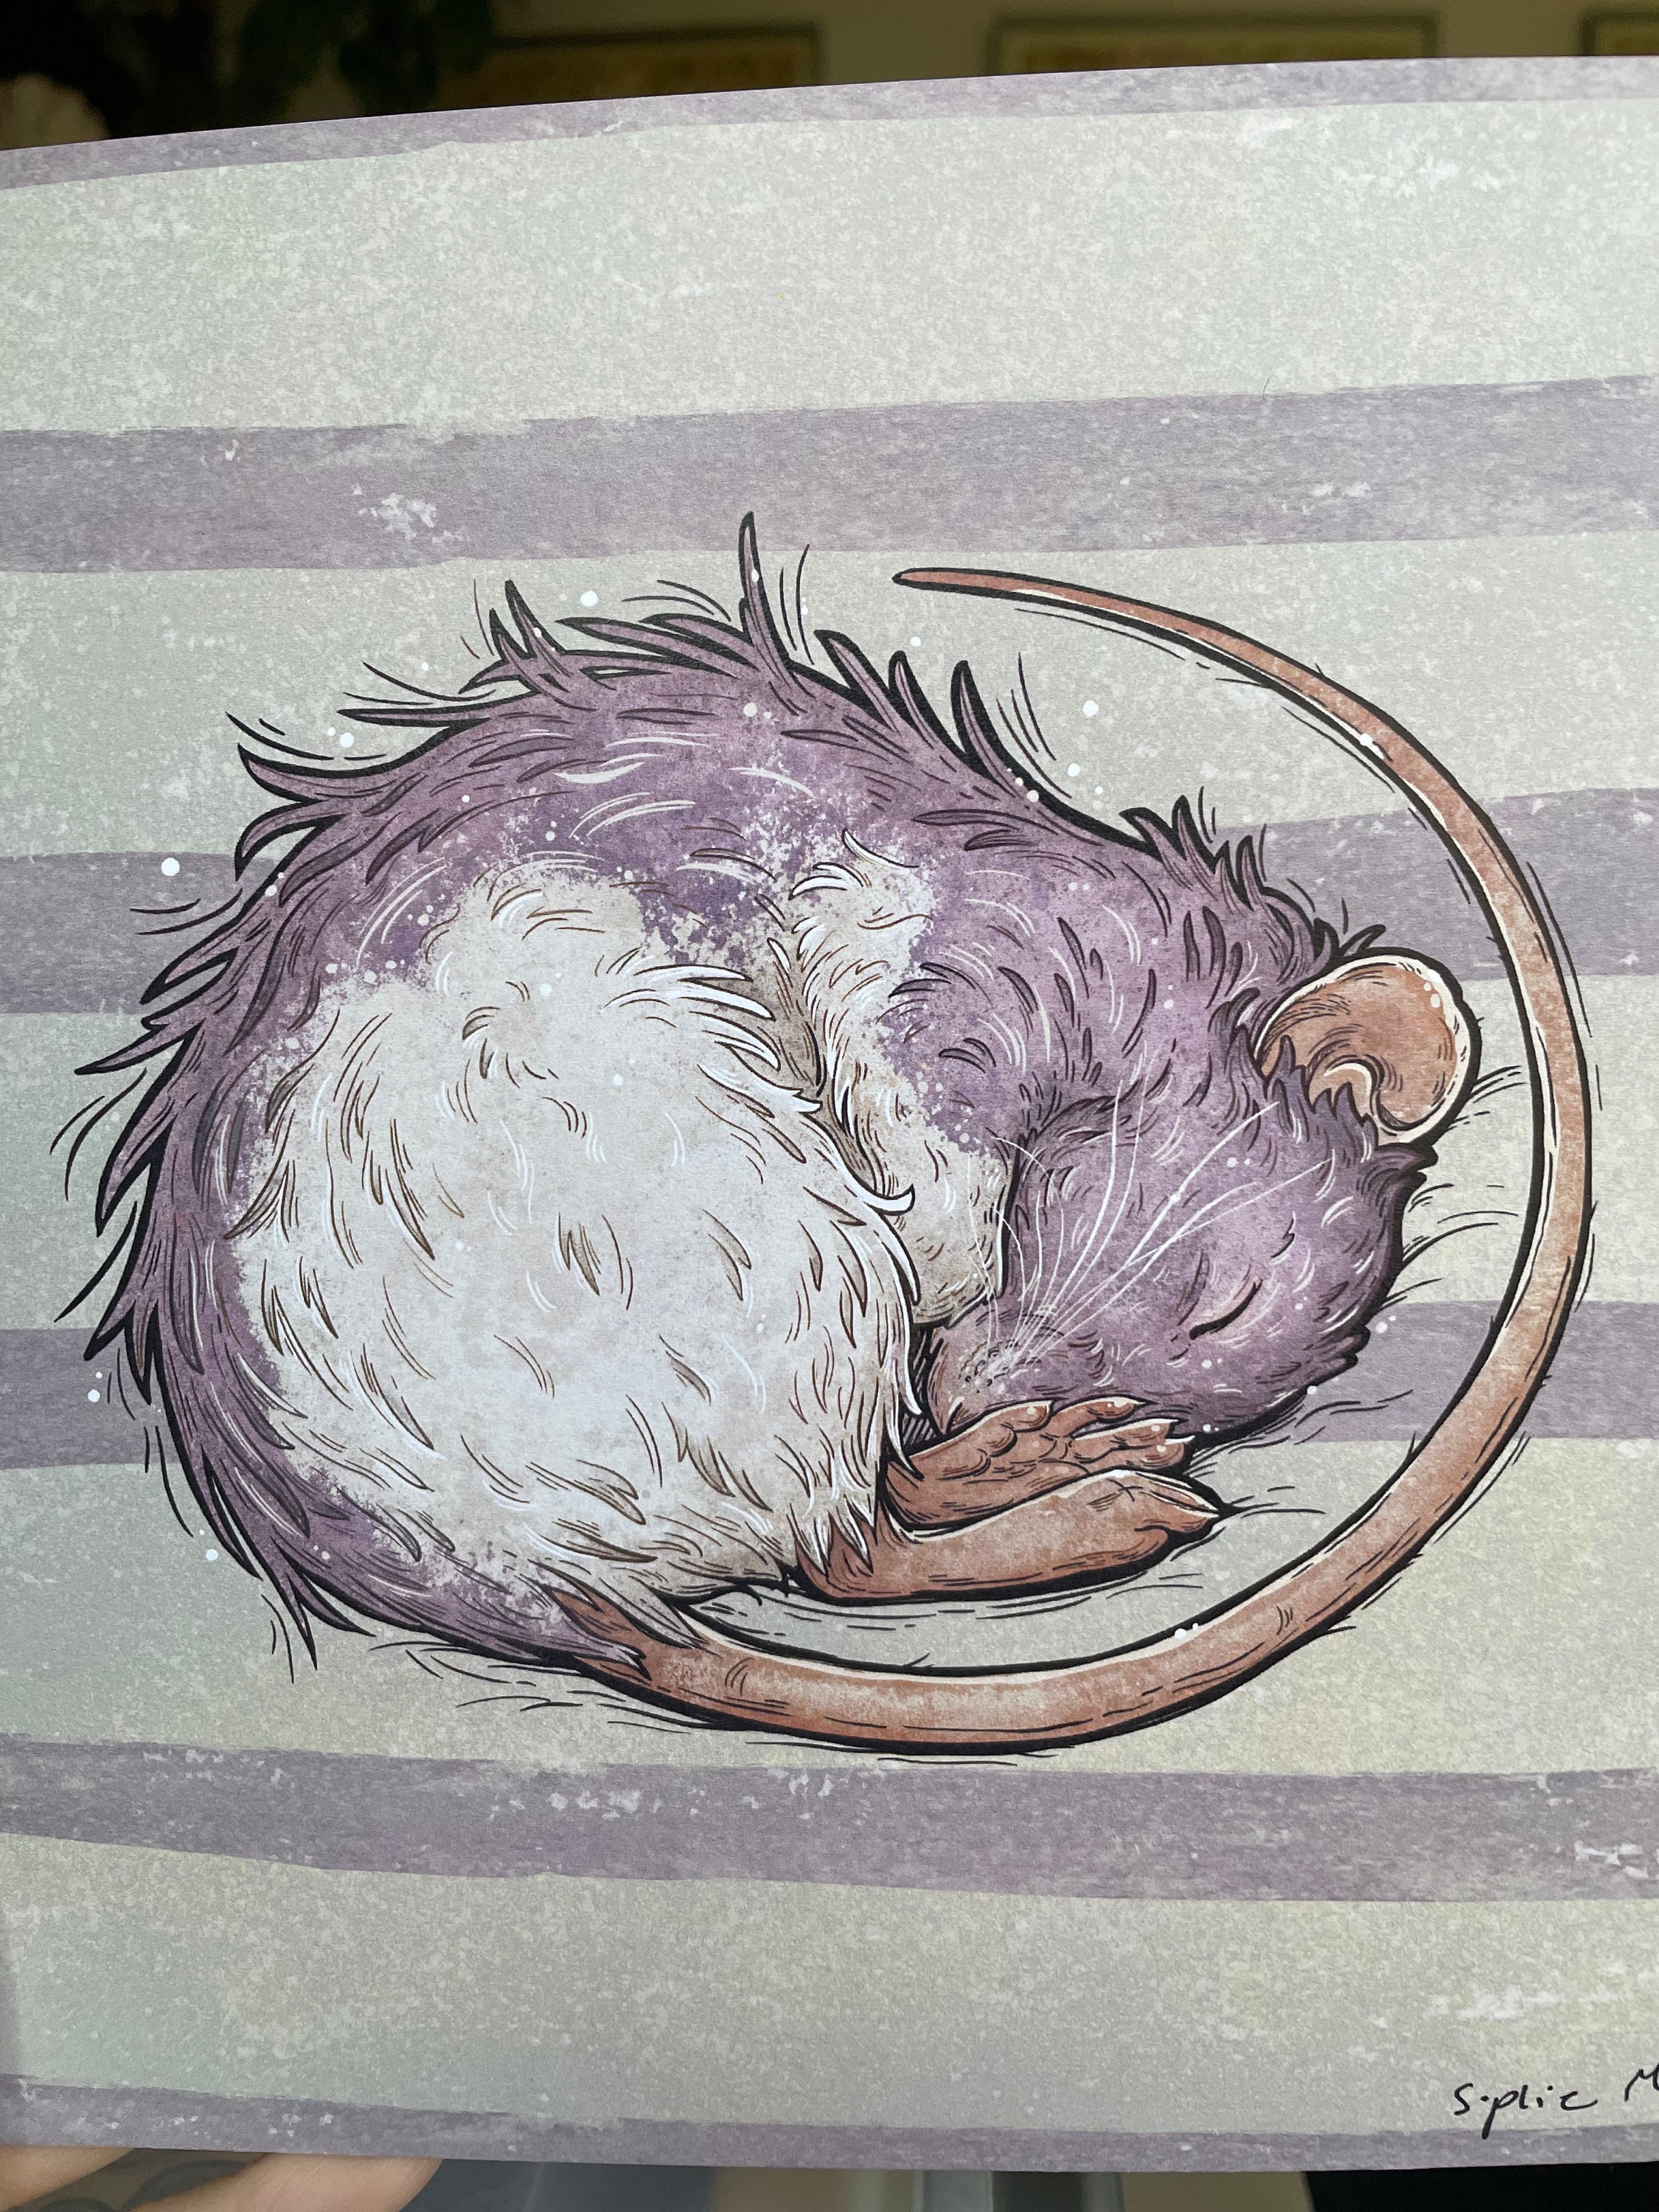 LoL.bit little.rat.boy - Illustrations ART street